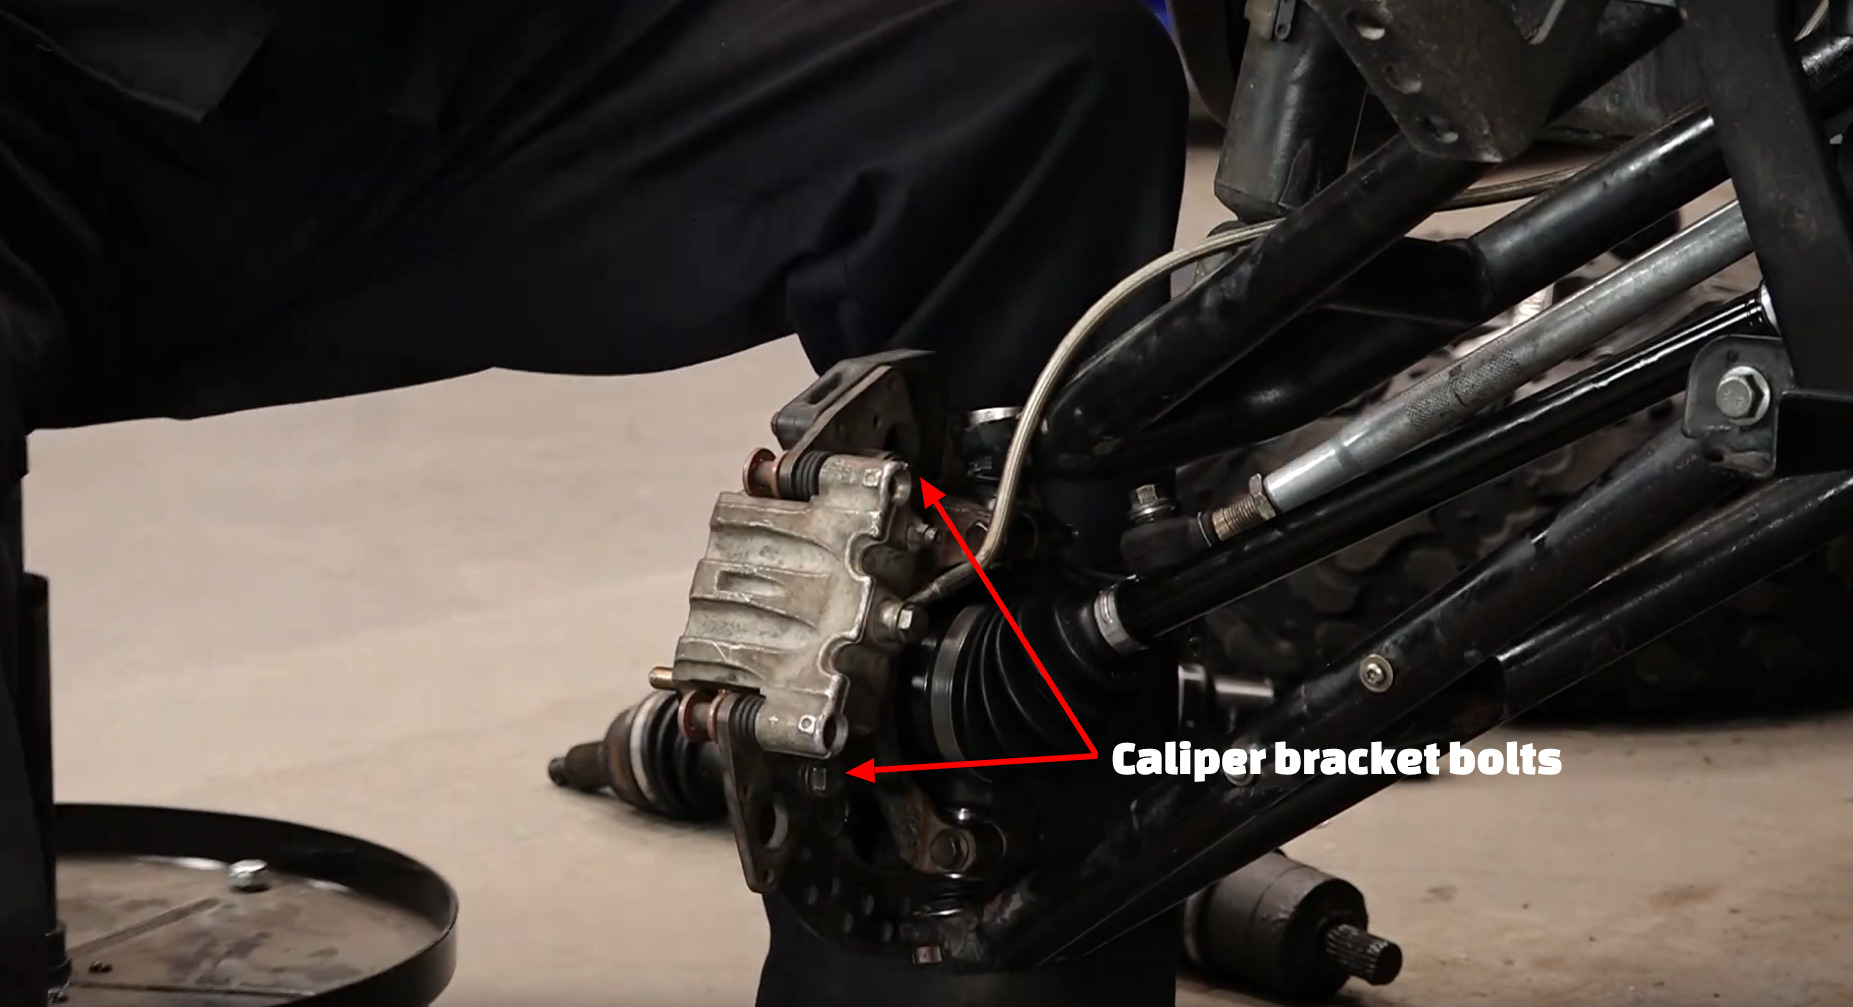 Polaris Ranger Crew 800 caliper bracket bolts